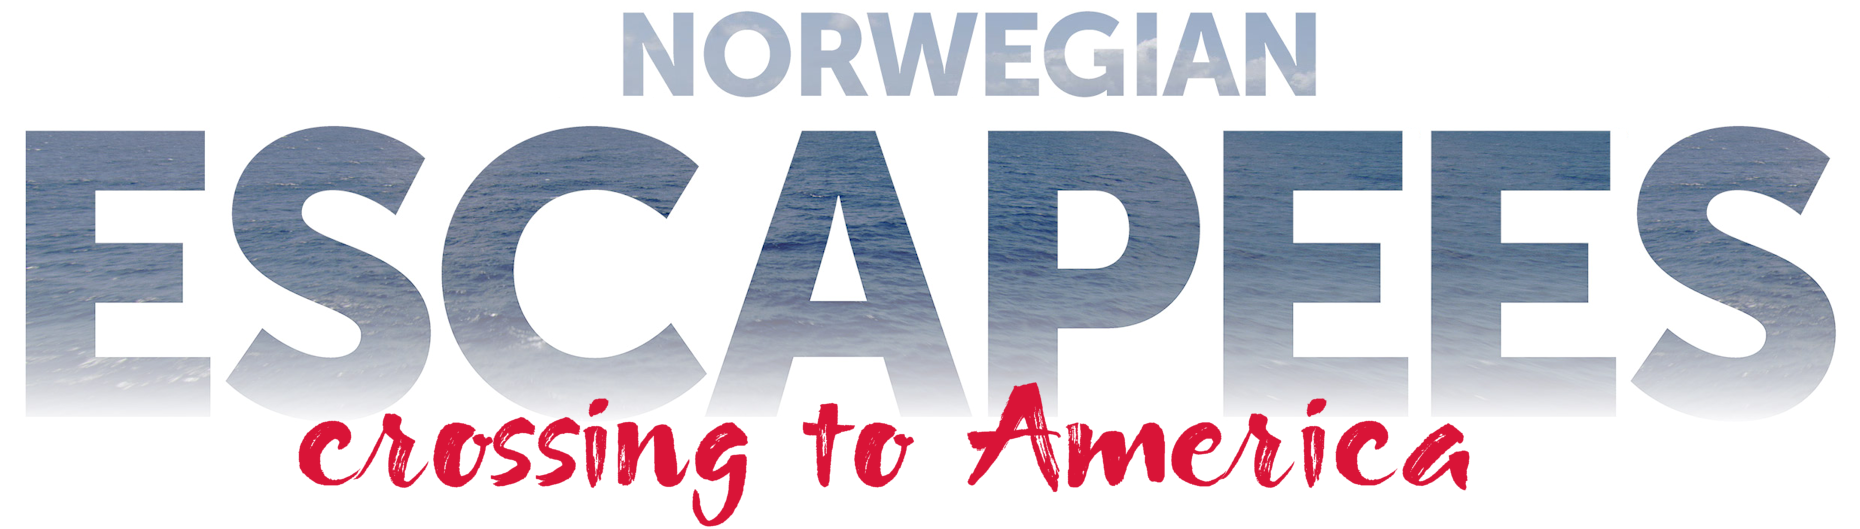 Norwegian Escape